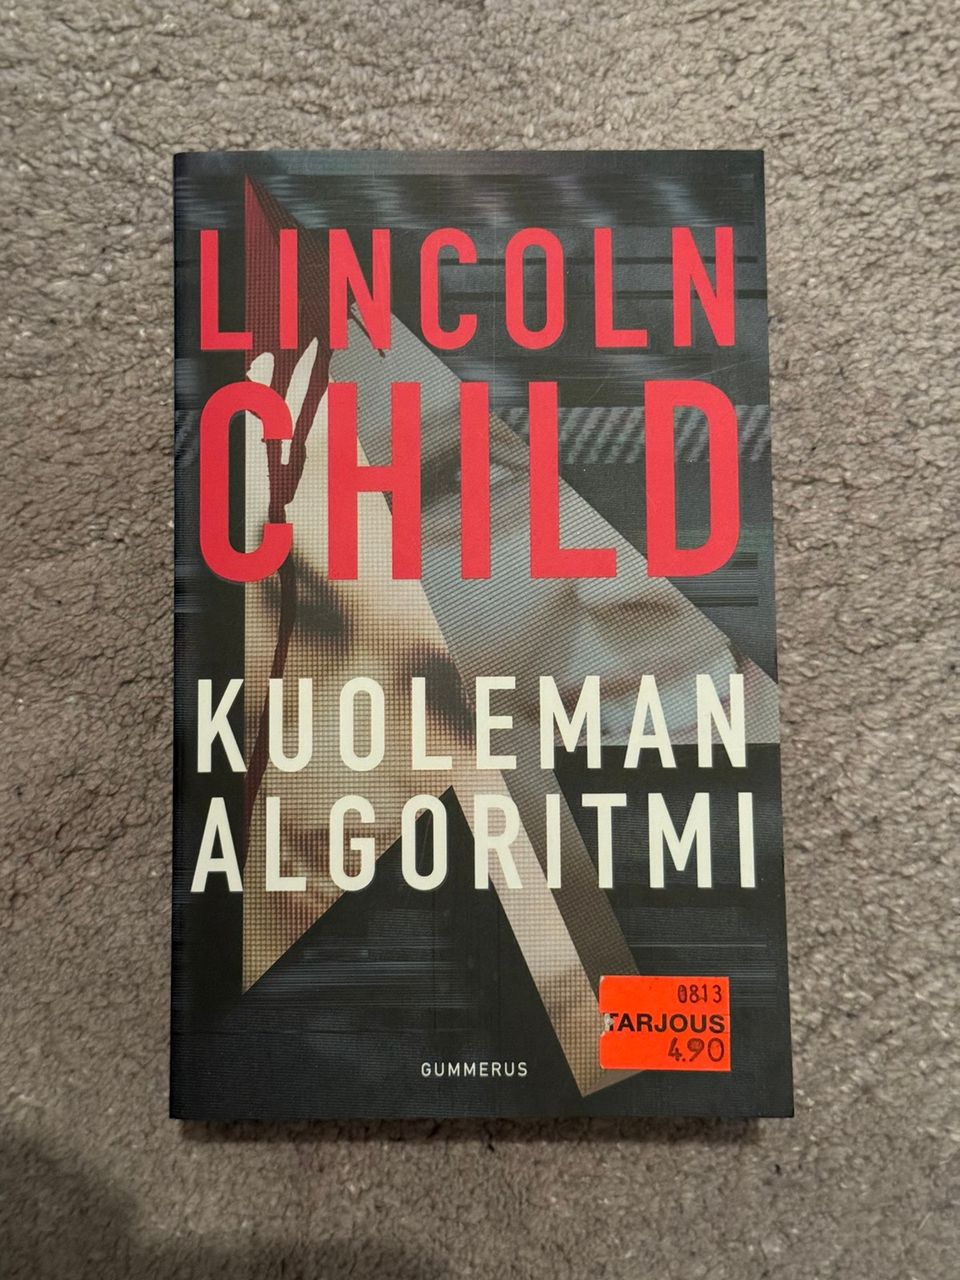 Lincoln Child: Kuoleman algoritmi